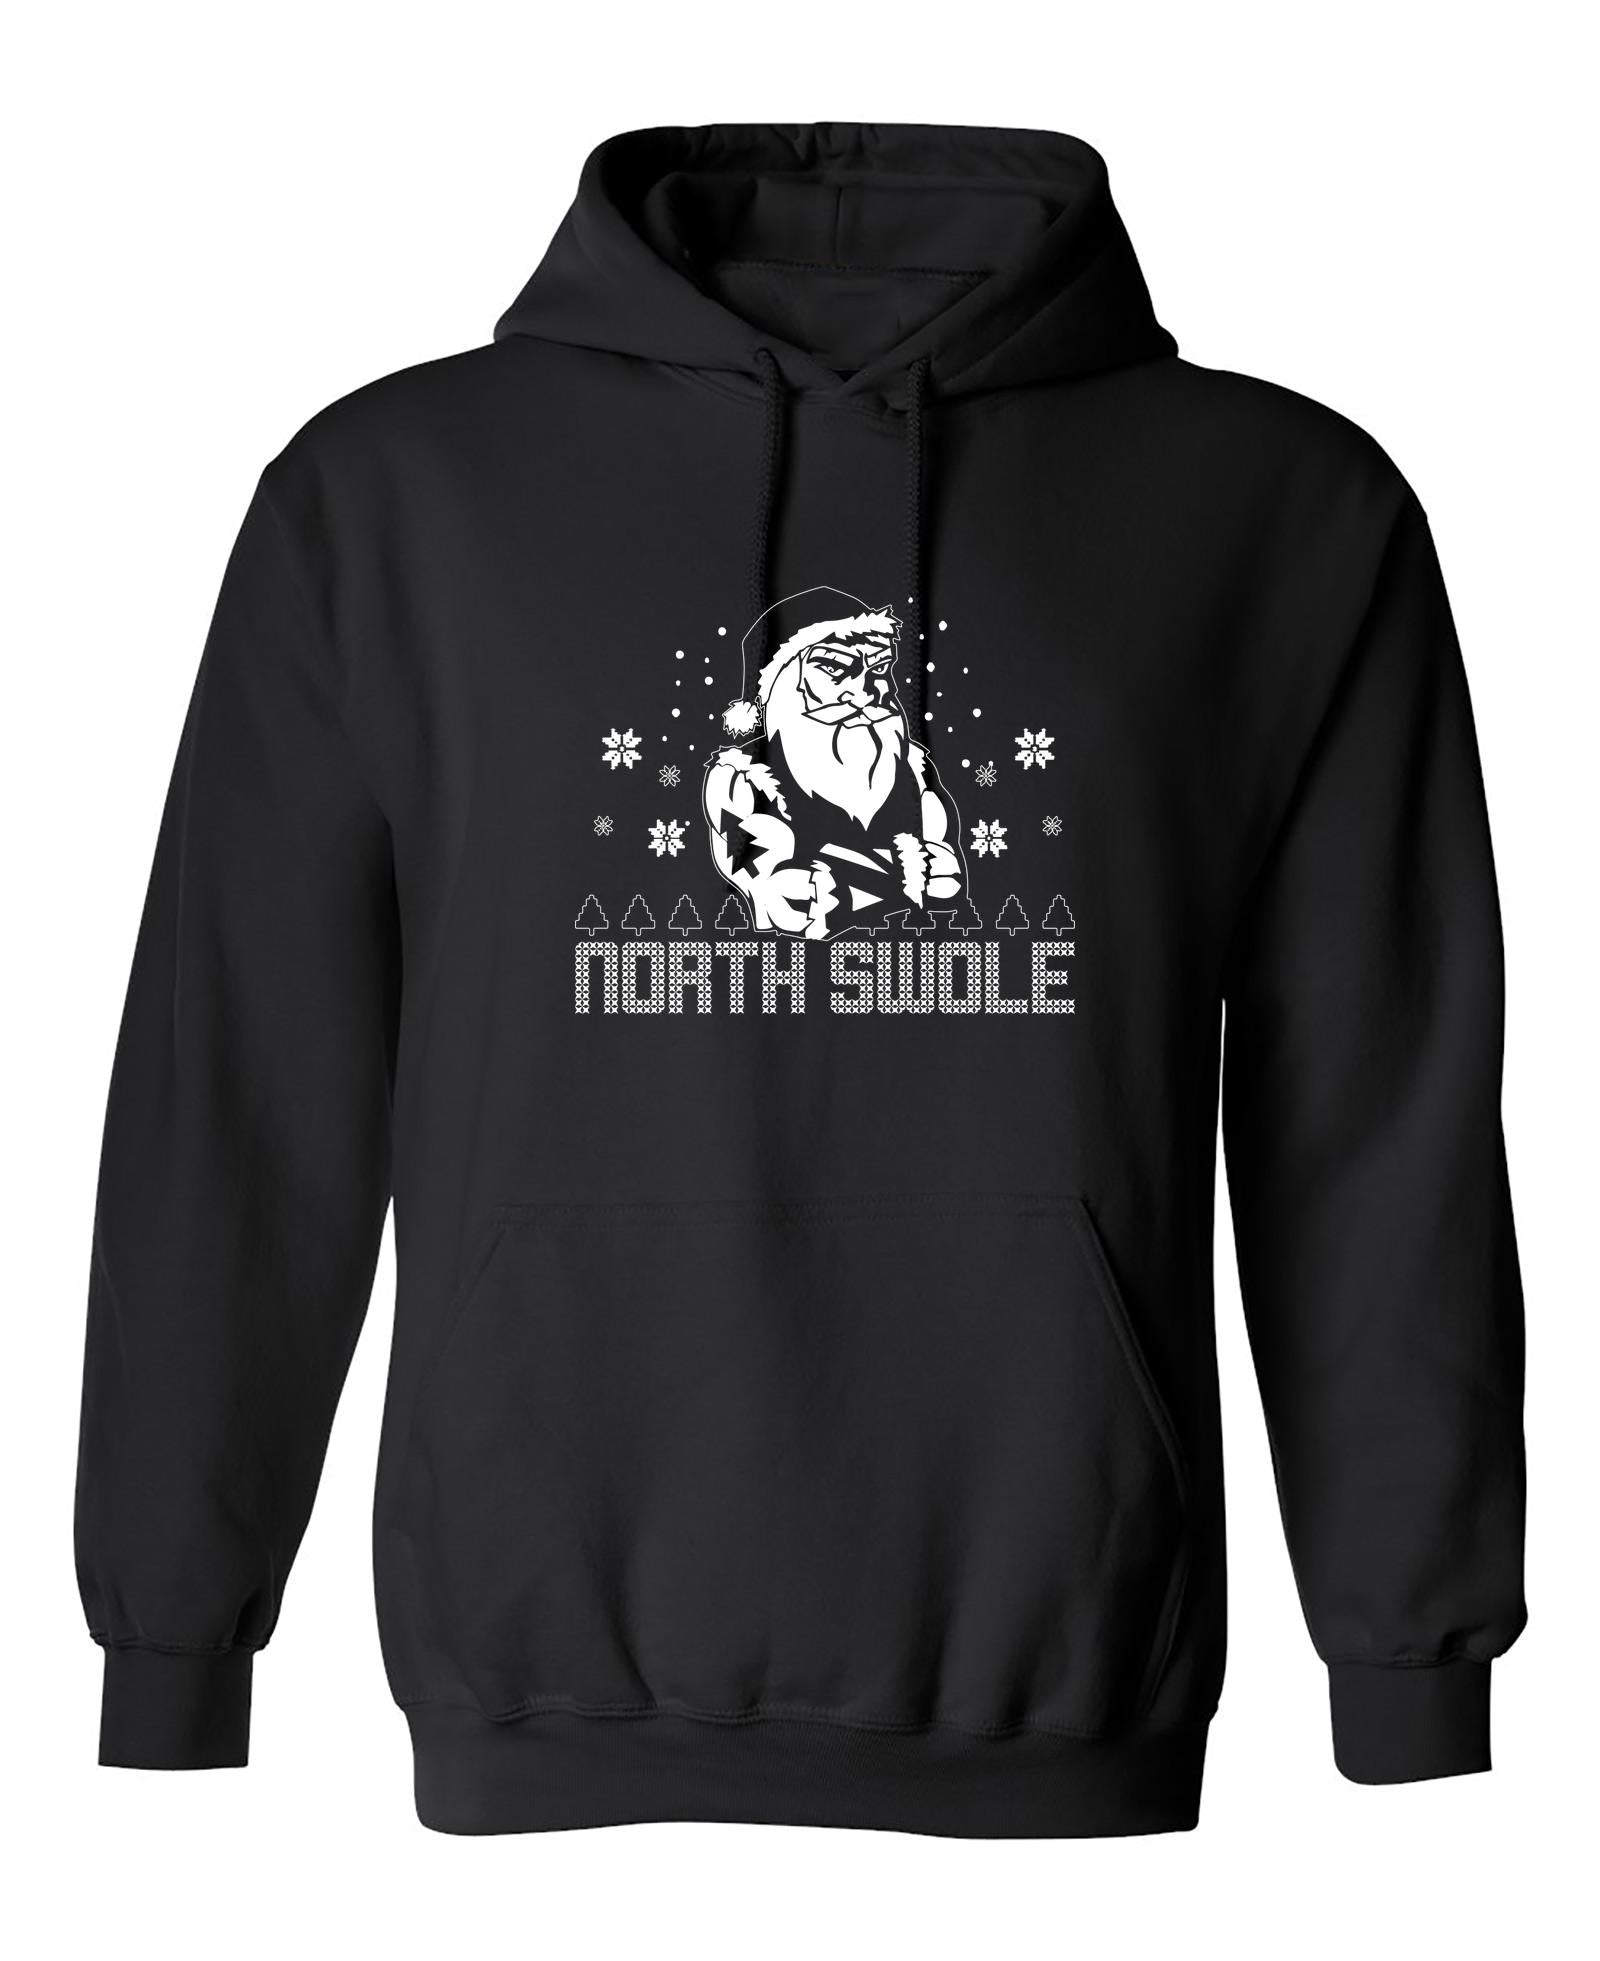 Funny T-Shirts design "North Swole Funny Shirt"